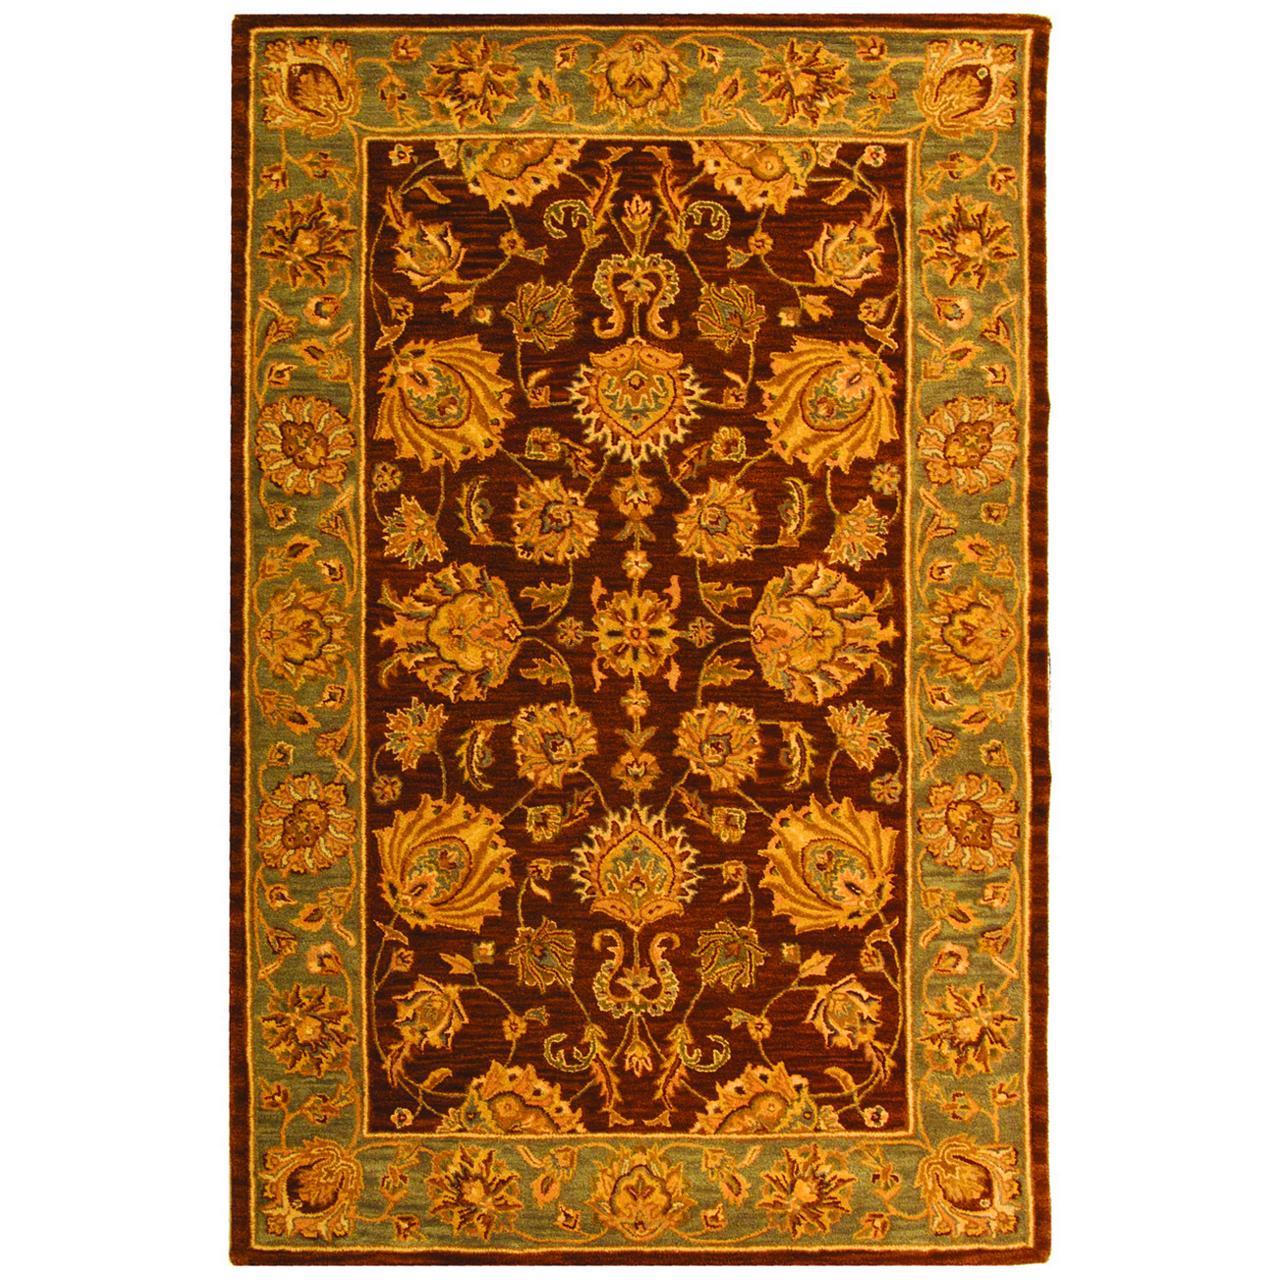 SAFAVIEH Heritage Regis Traditional Wool Area Rug, Brown/Blue, 7'6" x 9'6" Oval - image 1 of 4